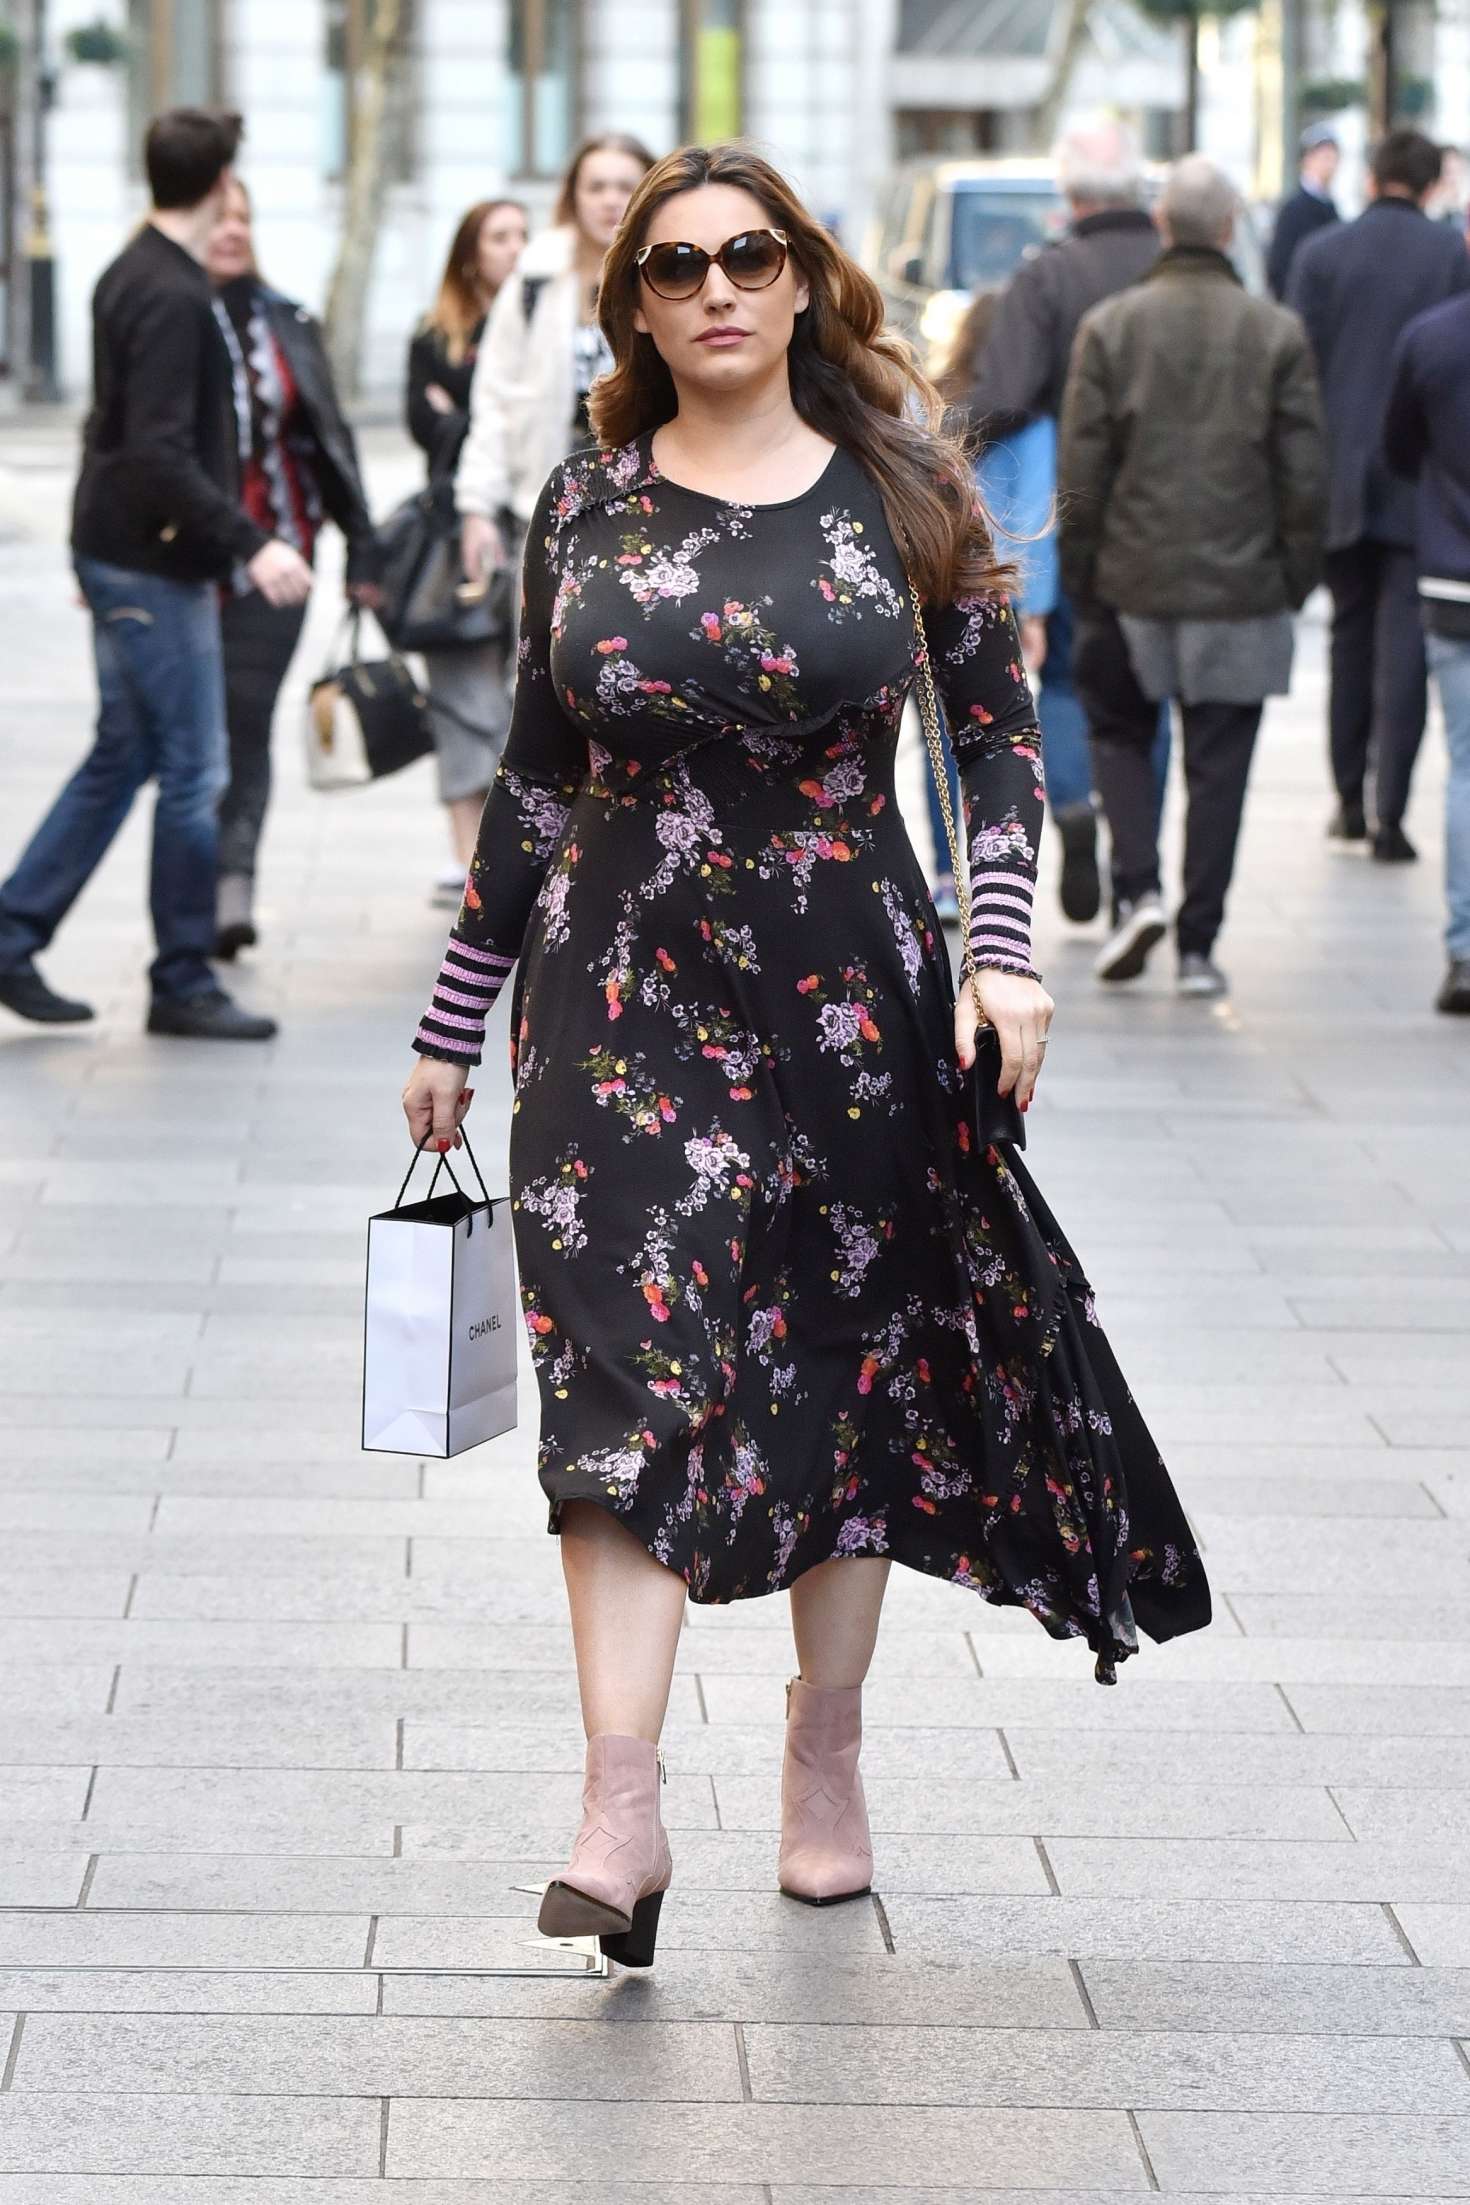 Kelly Brook in Floral Dress â€“ Arriving at Global Radio in London